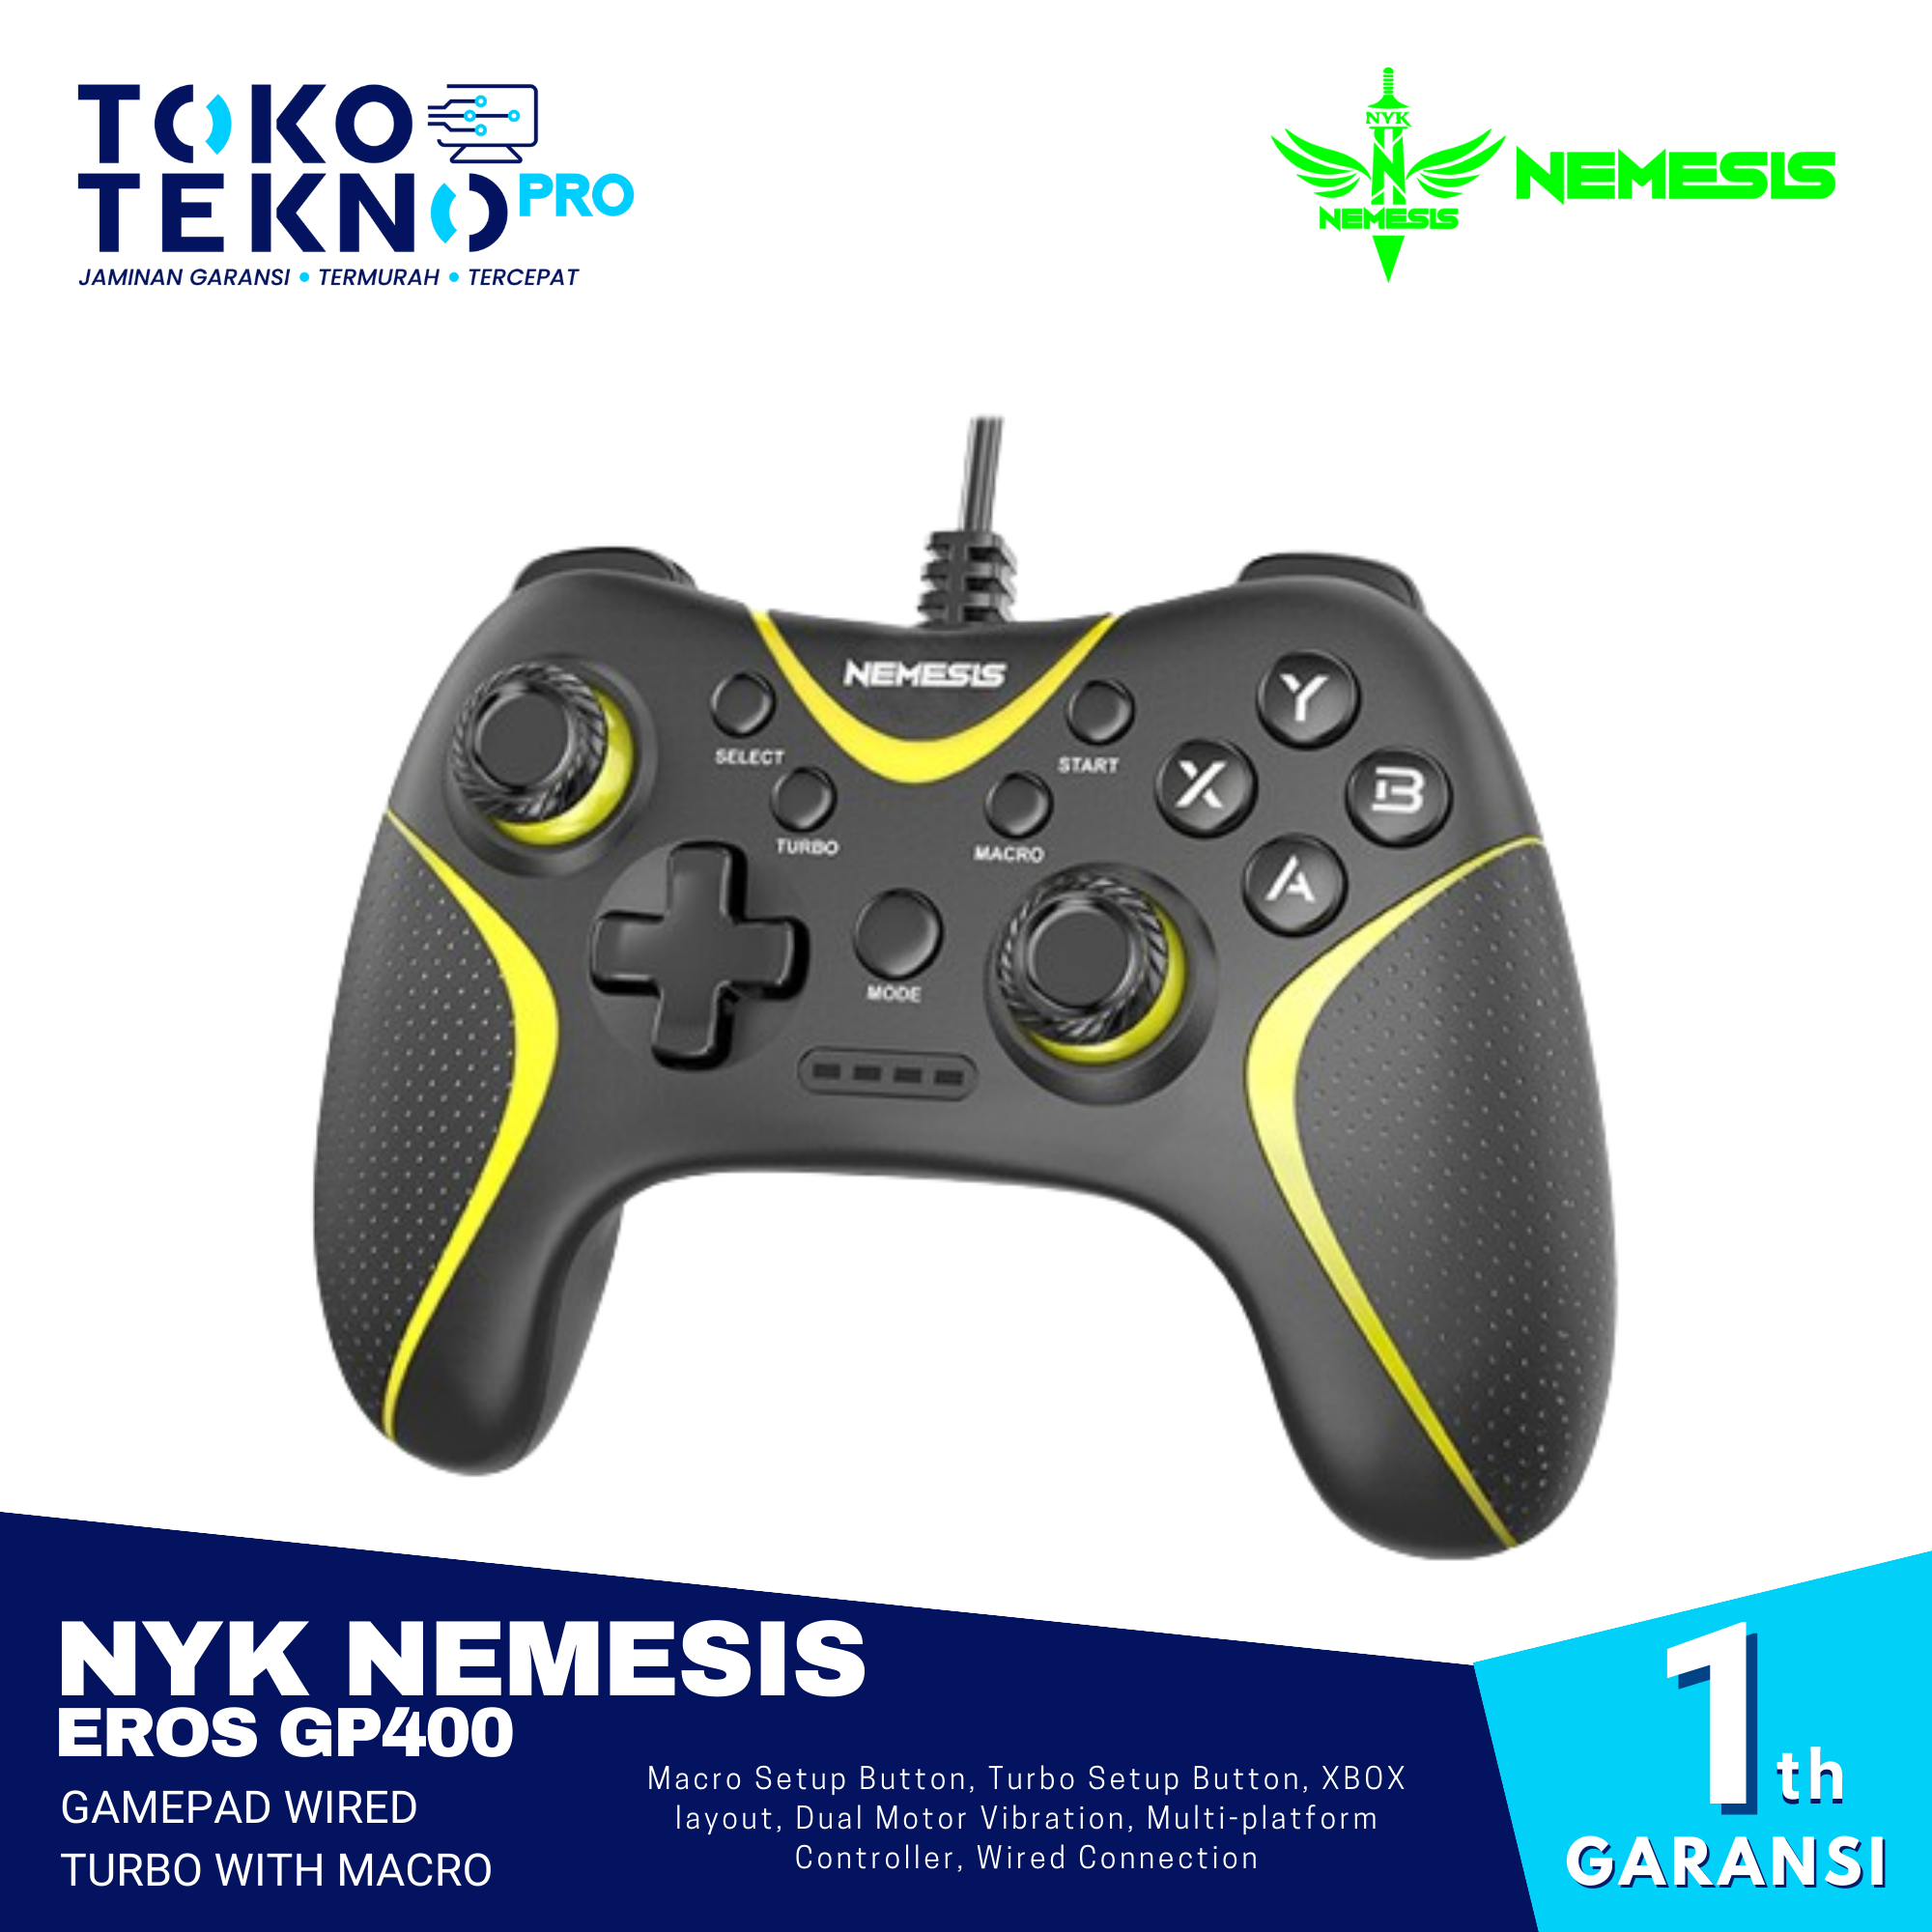 NYK Nemesis Eros GP400 Gamepad Wired Turbo with Macro